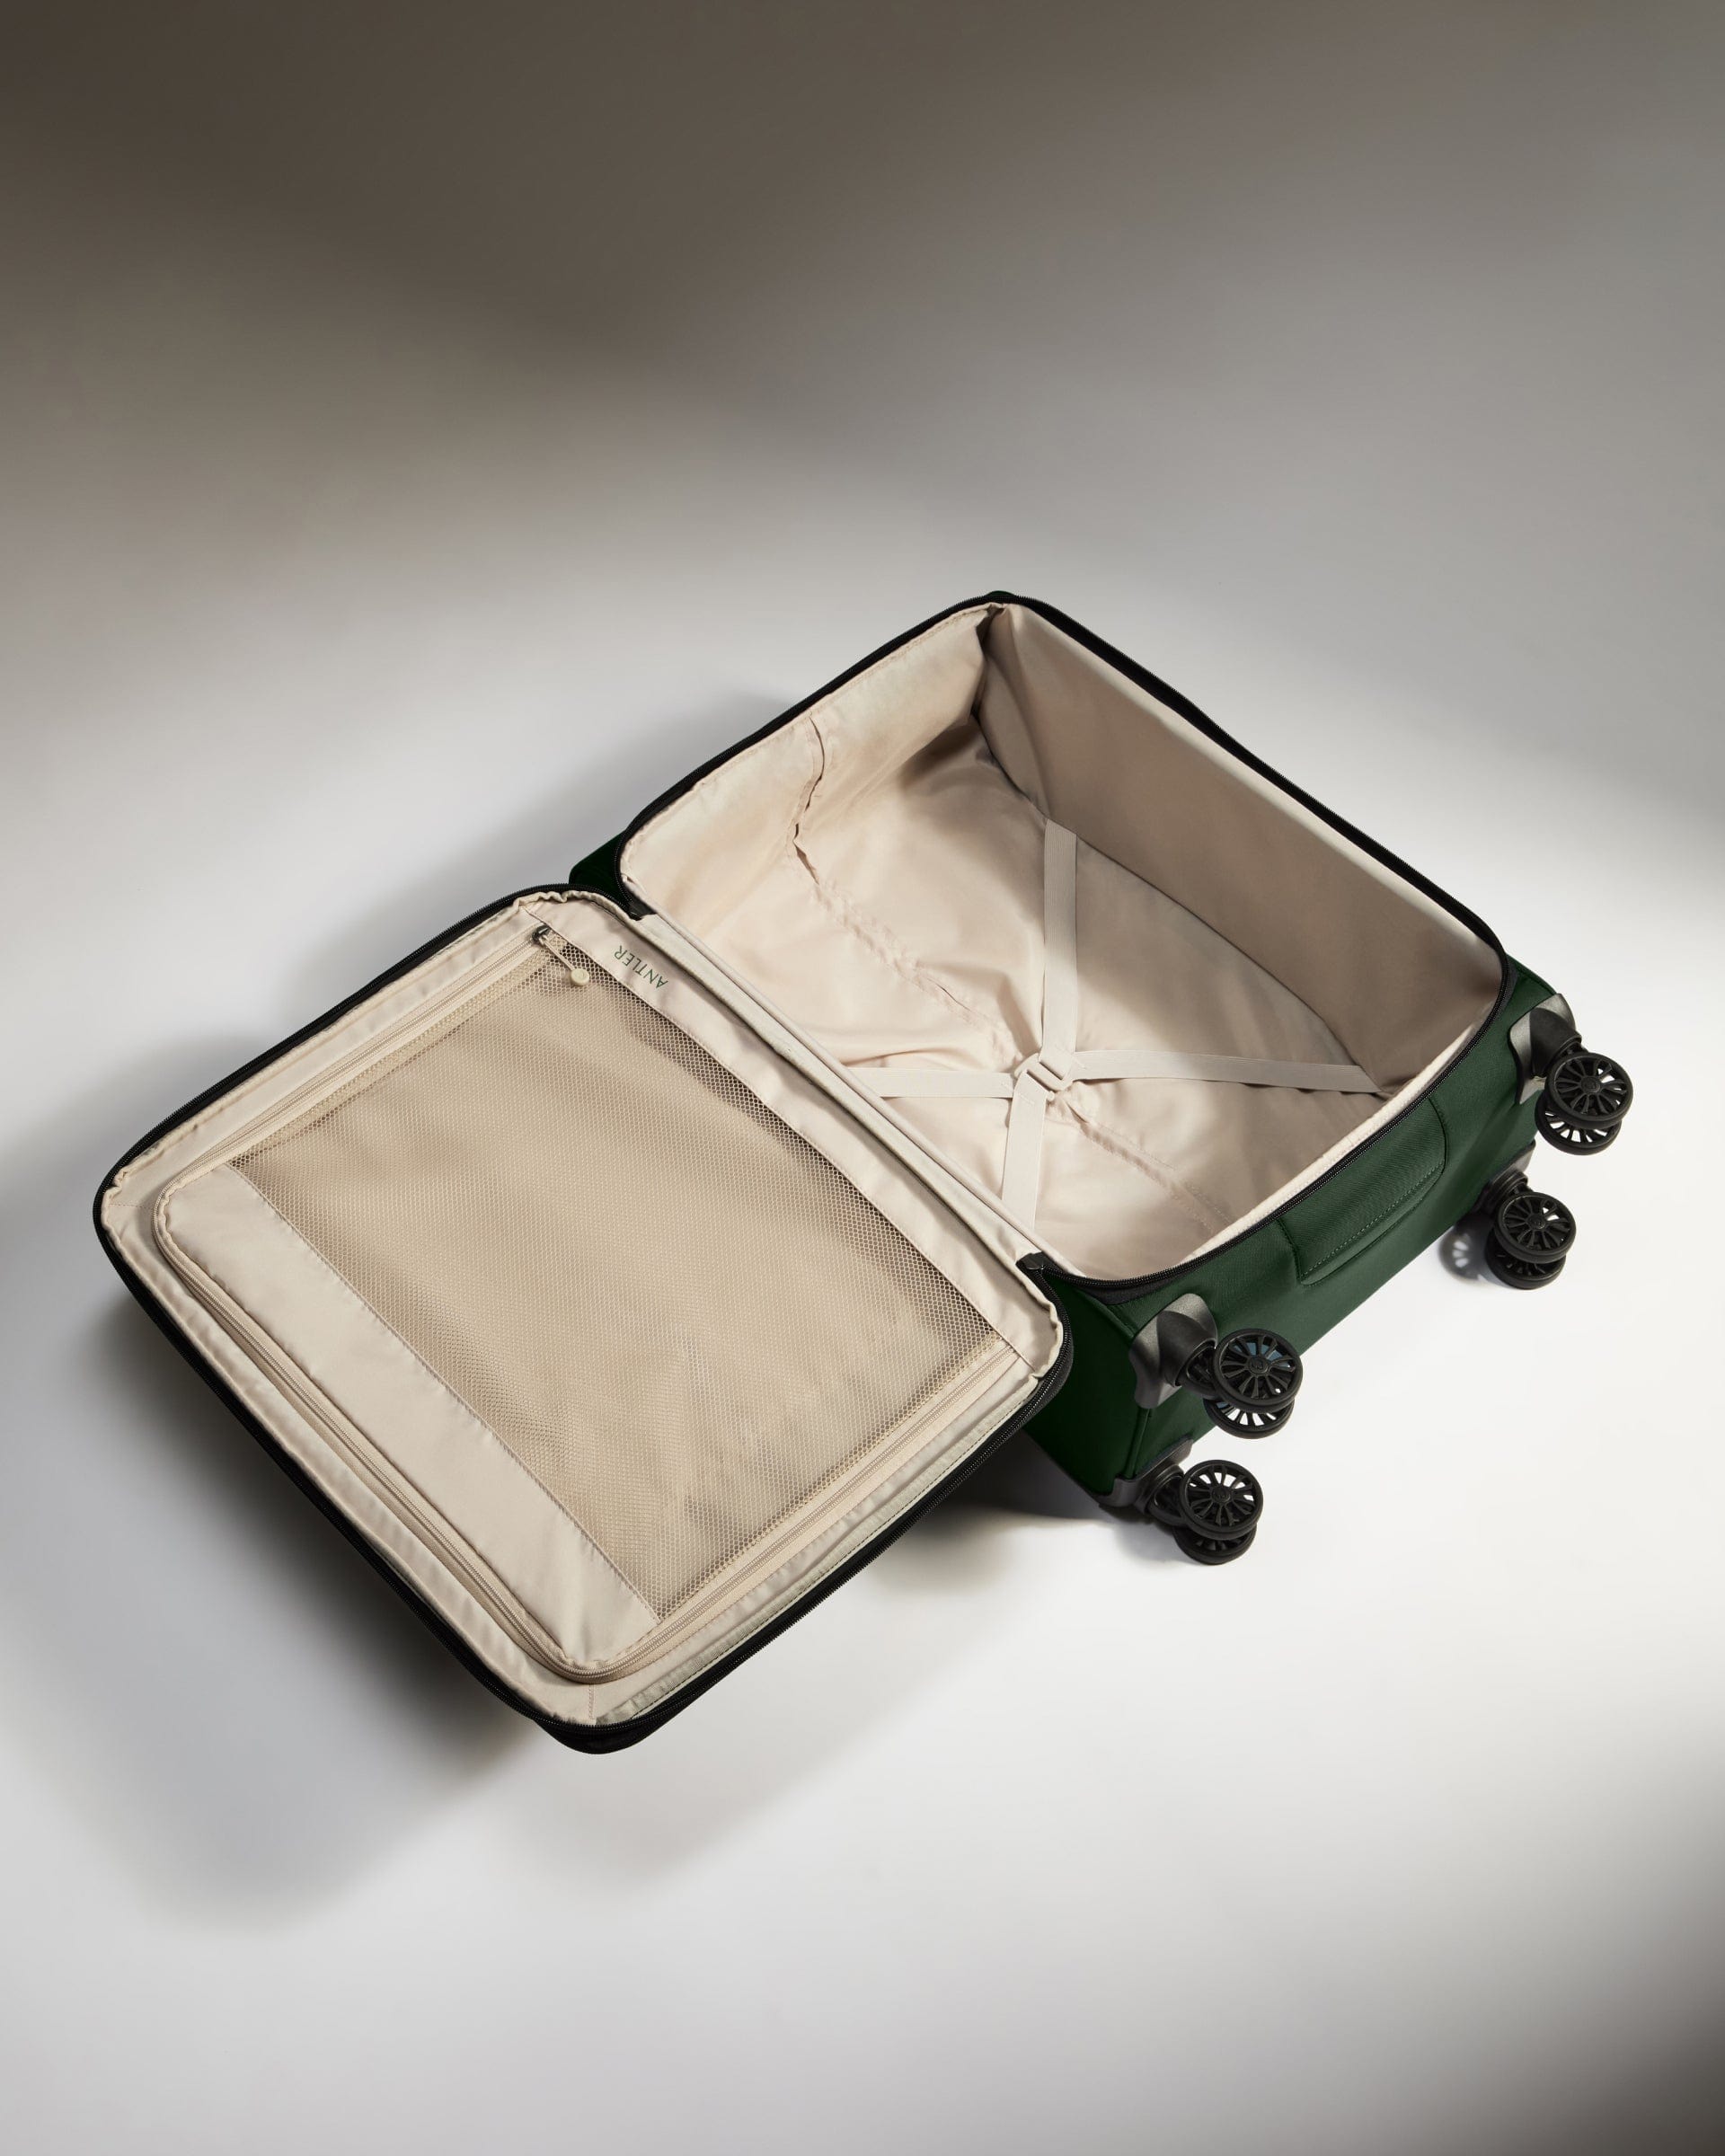 Antler Luggage -  Soft Stripe Medium in Antler Green - Soft Suitcase Soft Stripe Medium in Green | Soft Suitcase